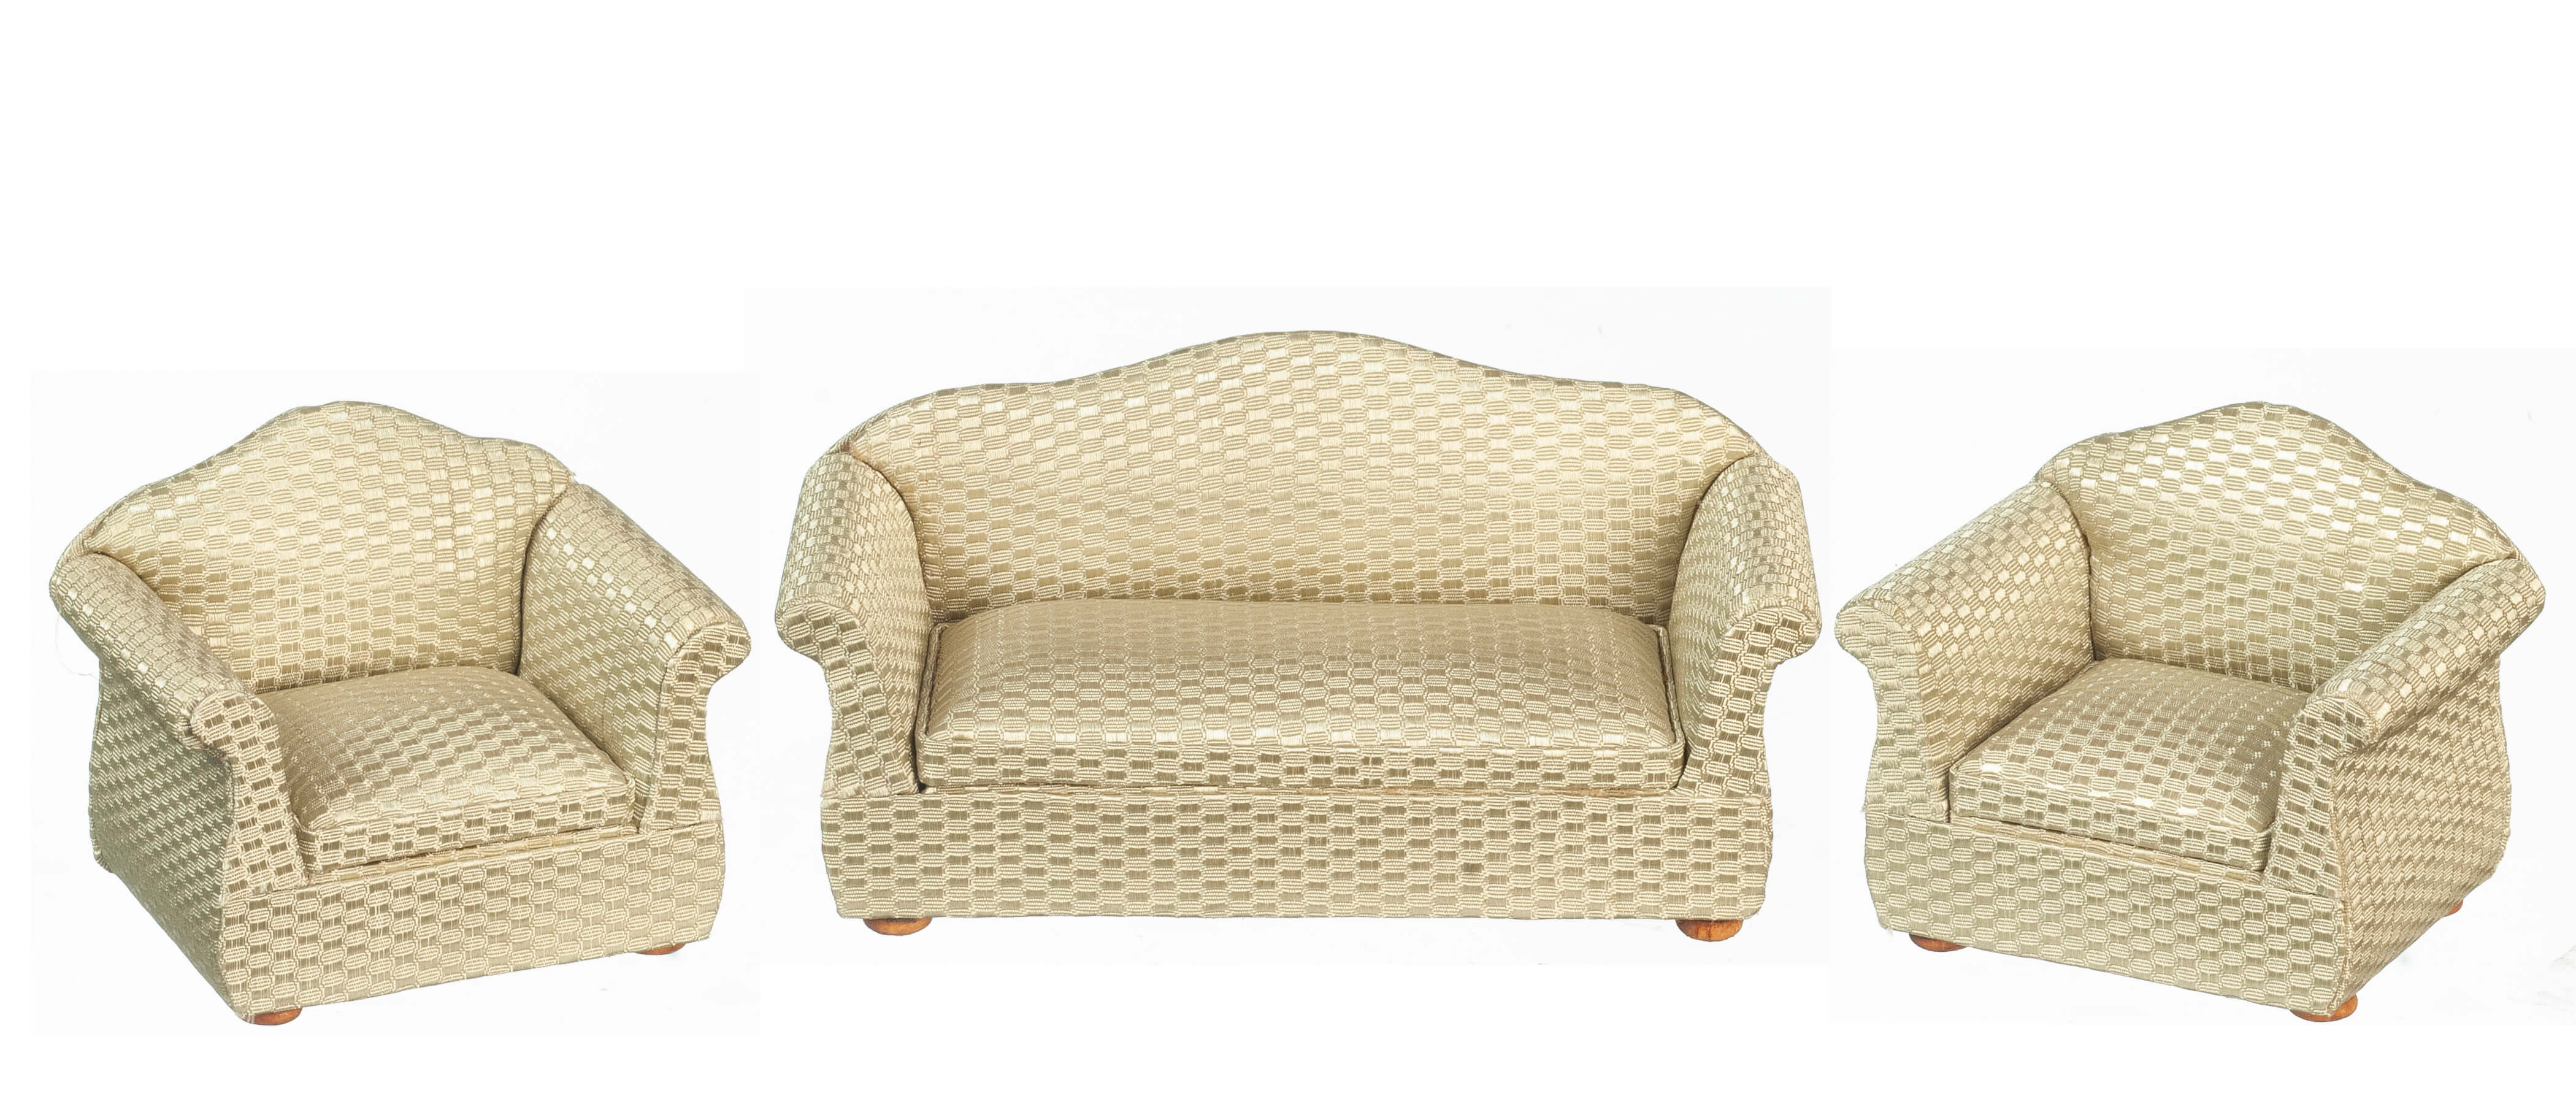 Living Room Furniture Set - Tan Fabric Upholstery - 3pc